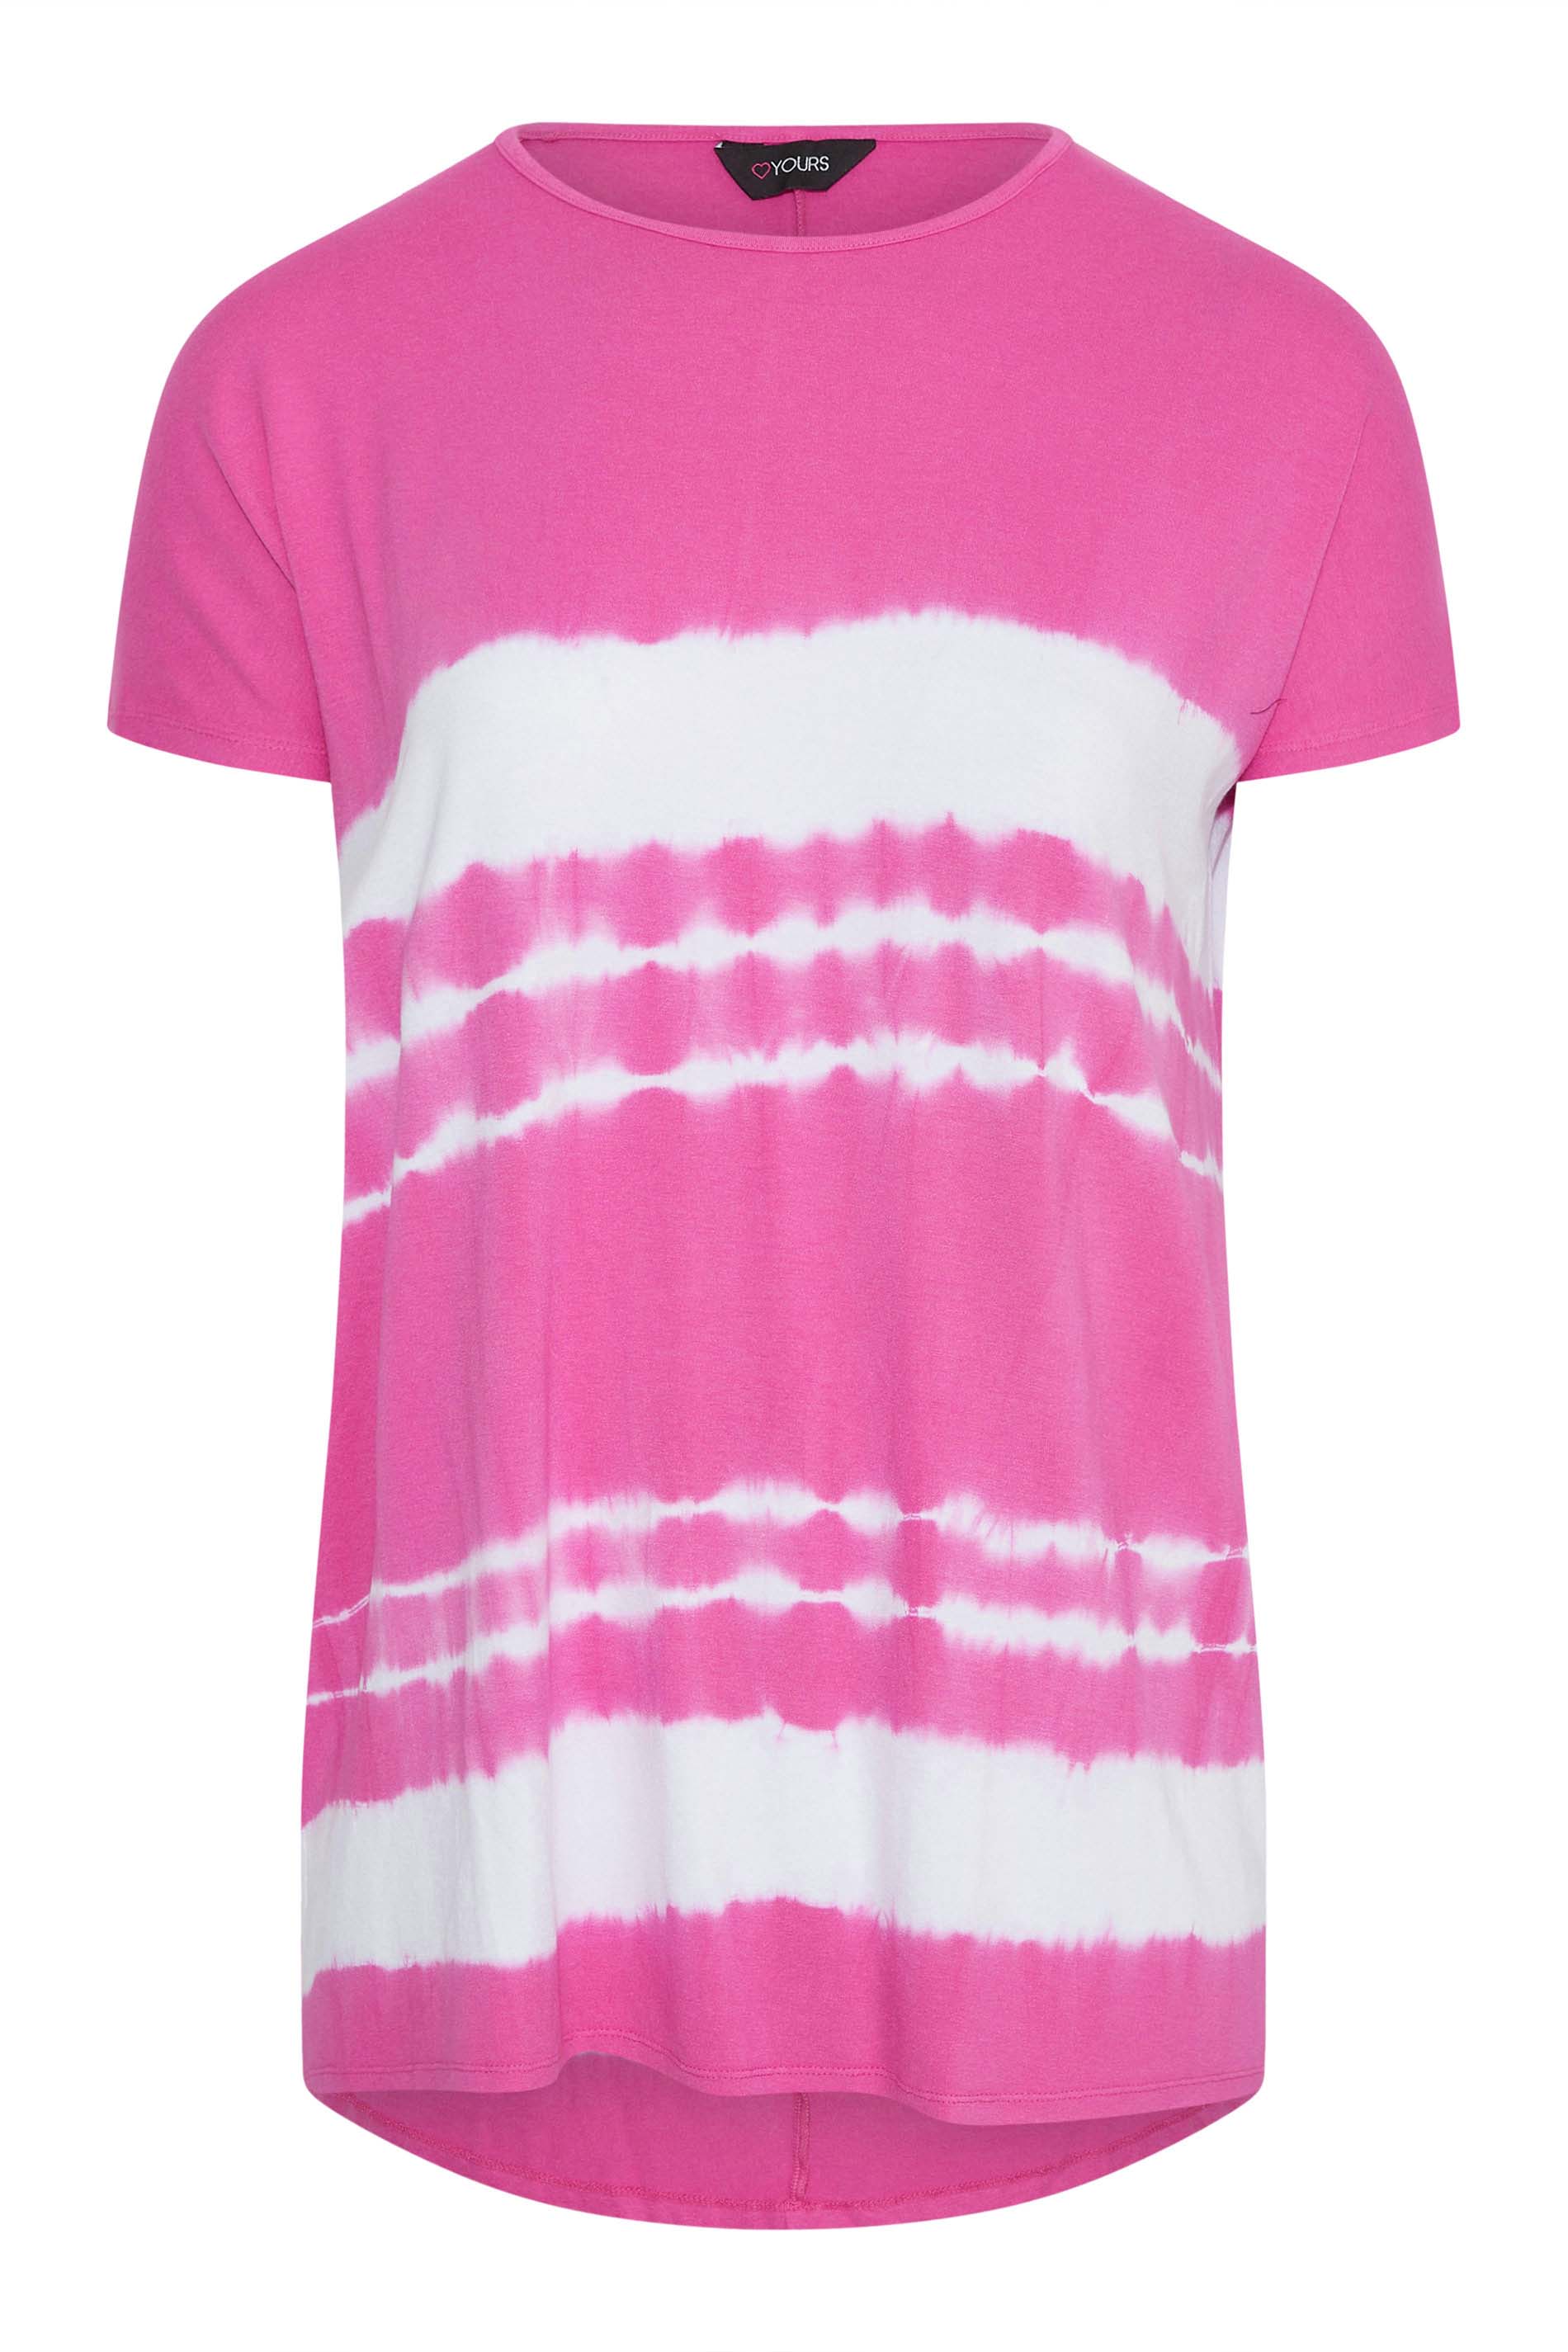 Grande taille  Tops Grande taille  T-Shirts | T-Shirt Rose Tie & Dye en Jersey - IO49169